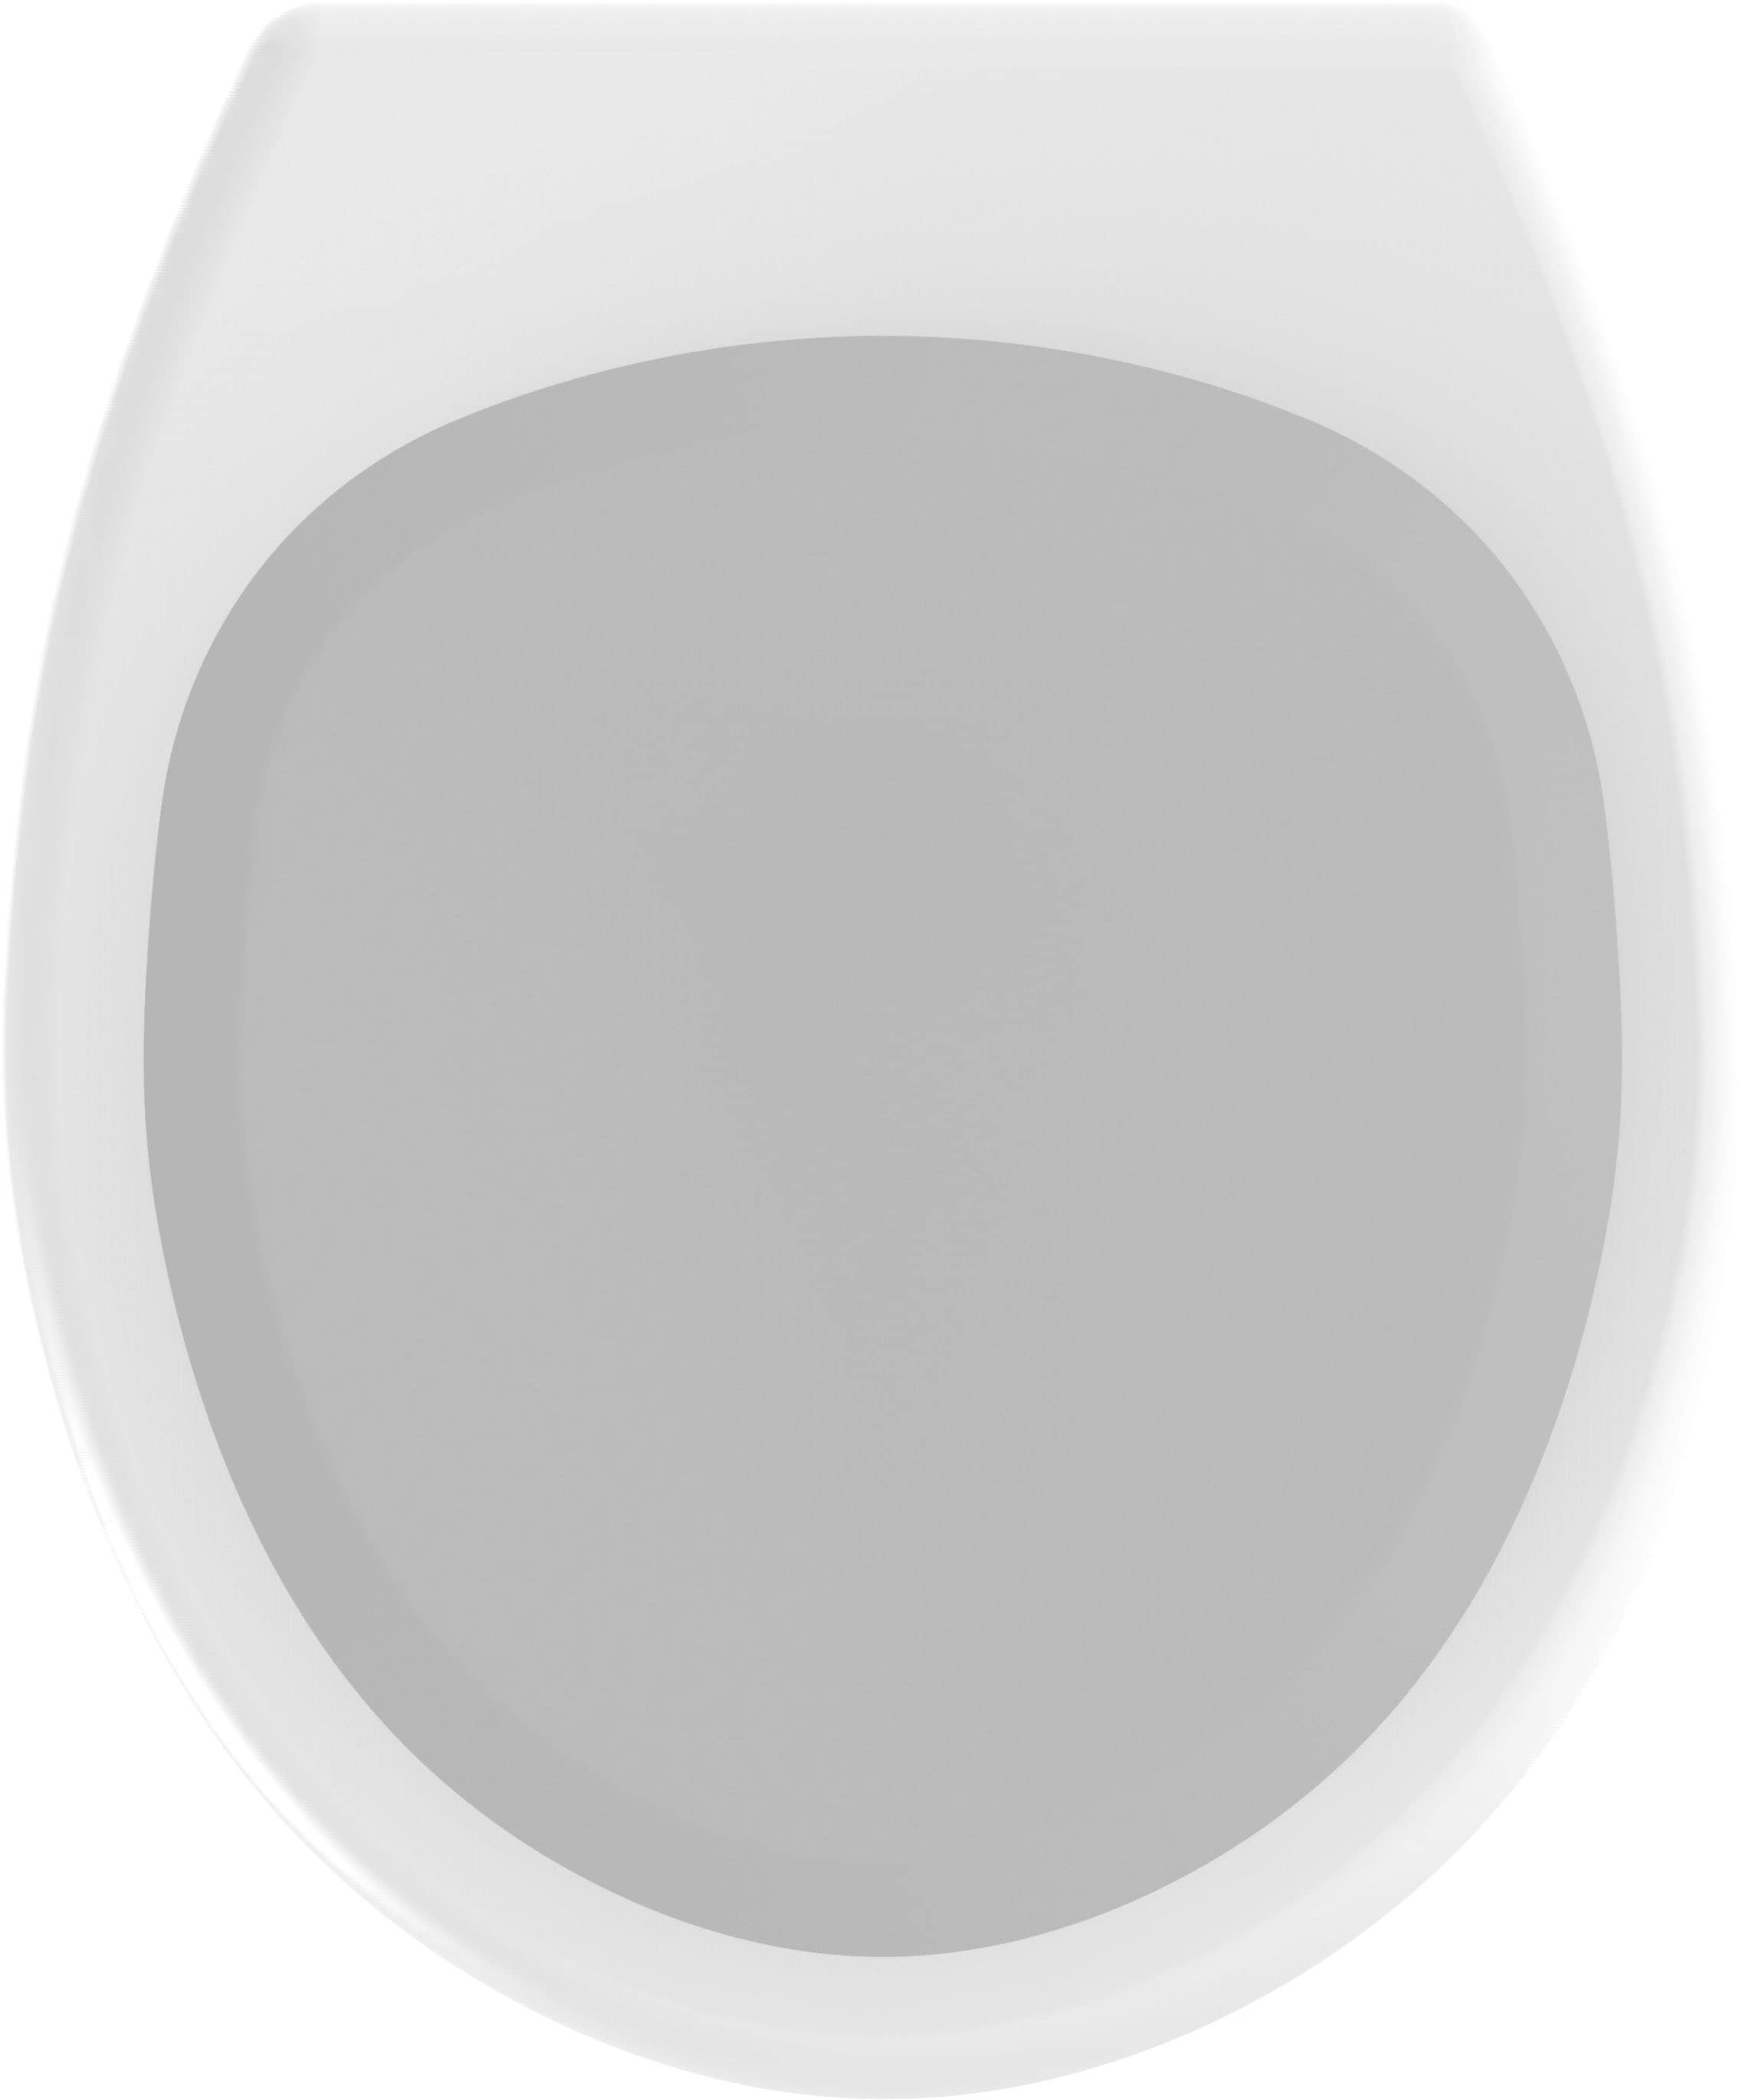 WC-Sitz »Secura Premium«, aus antibakteriellem Duroplast